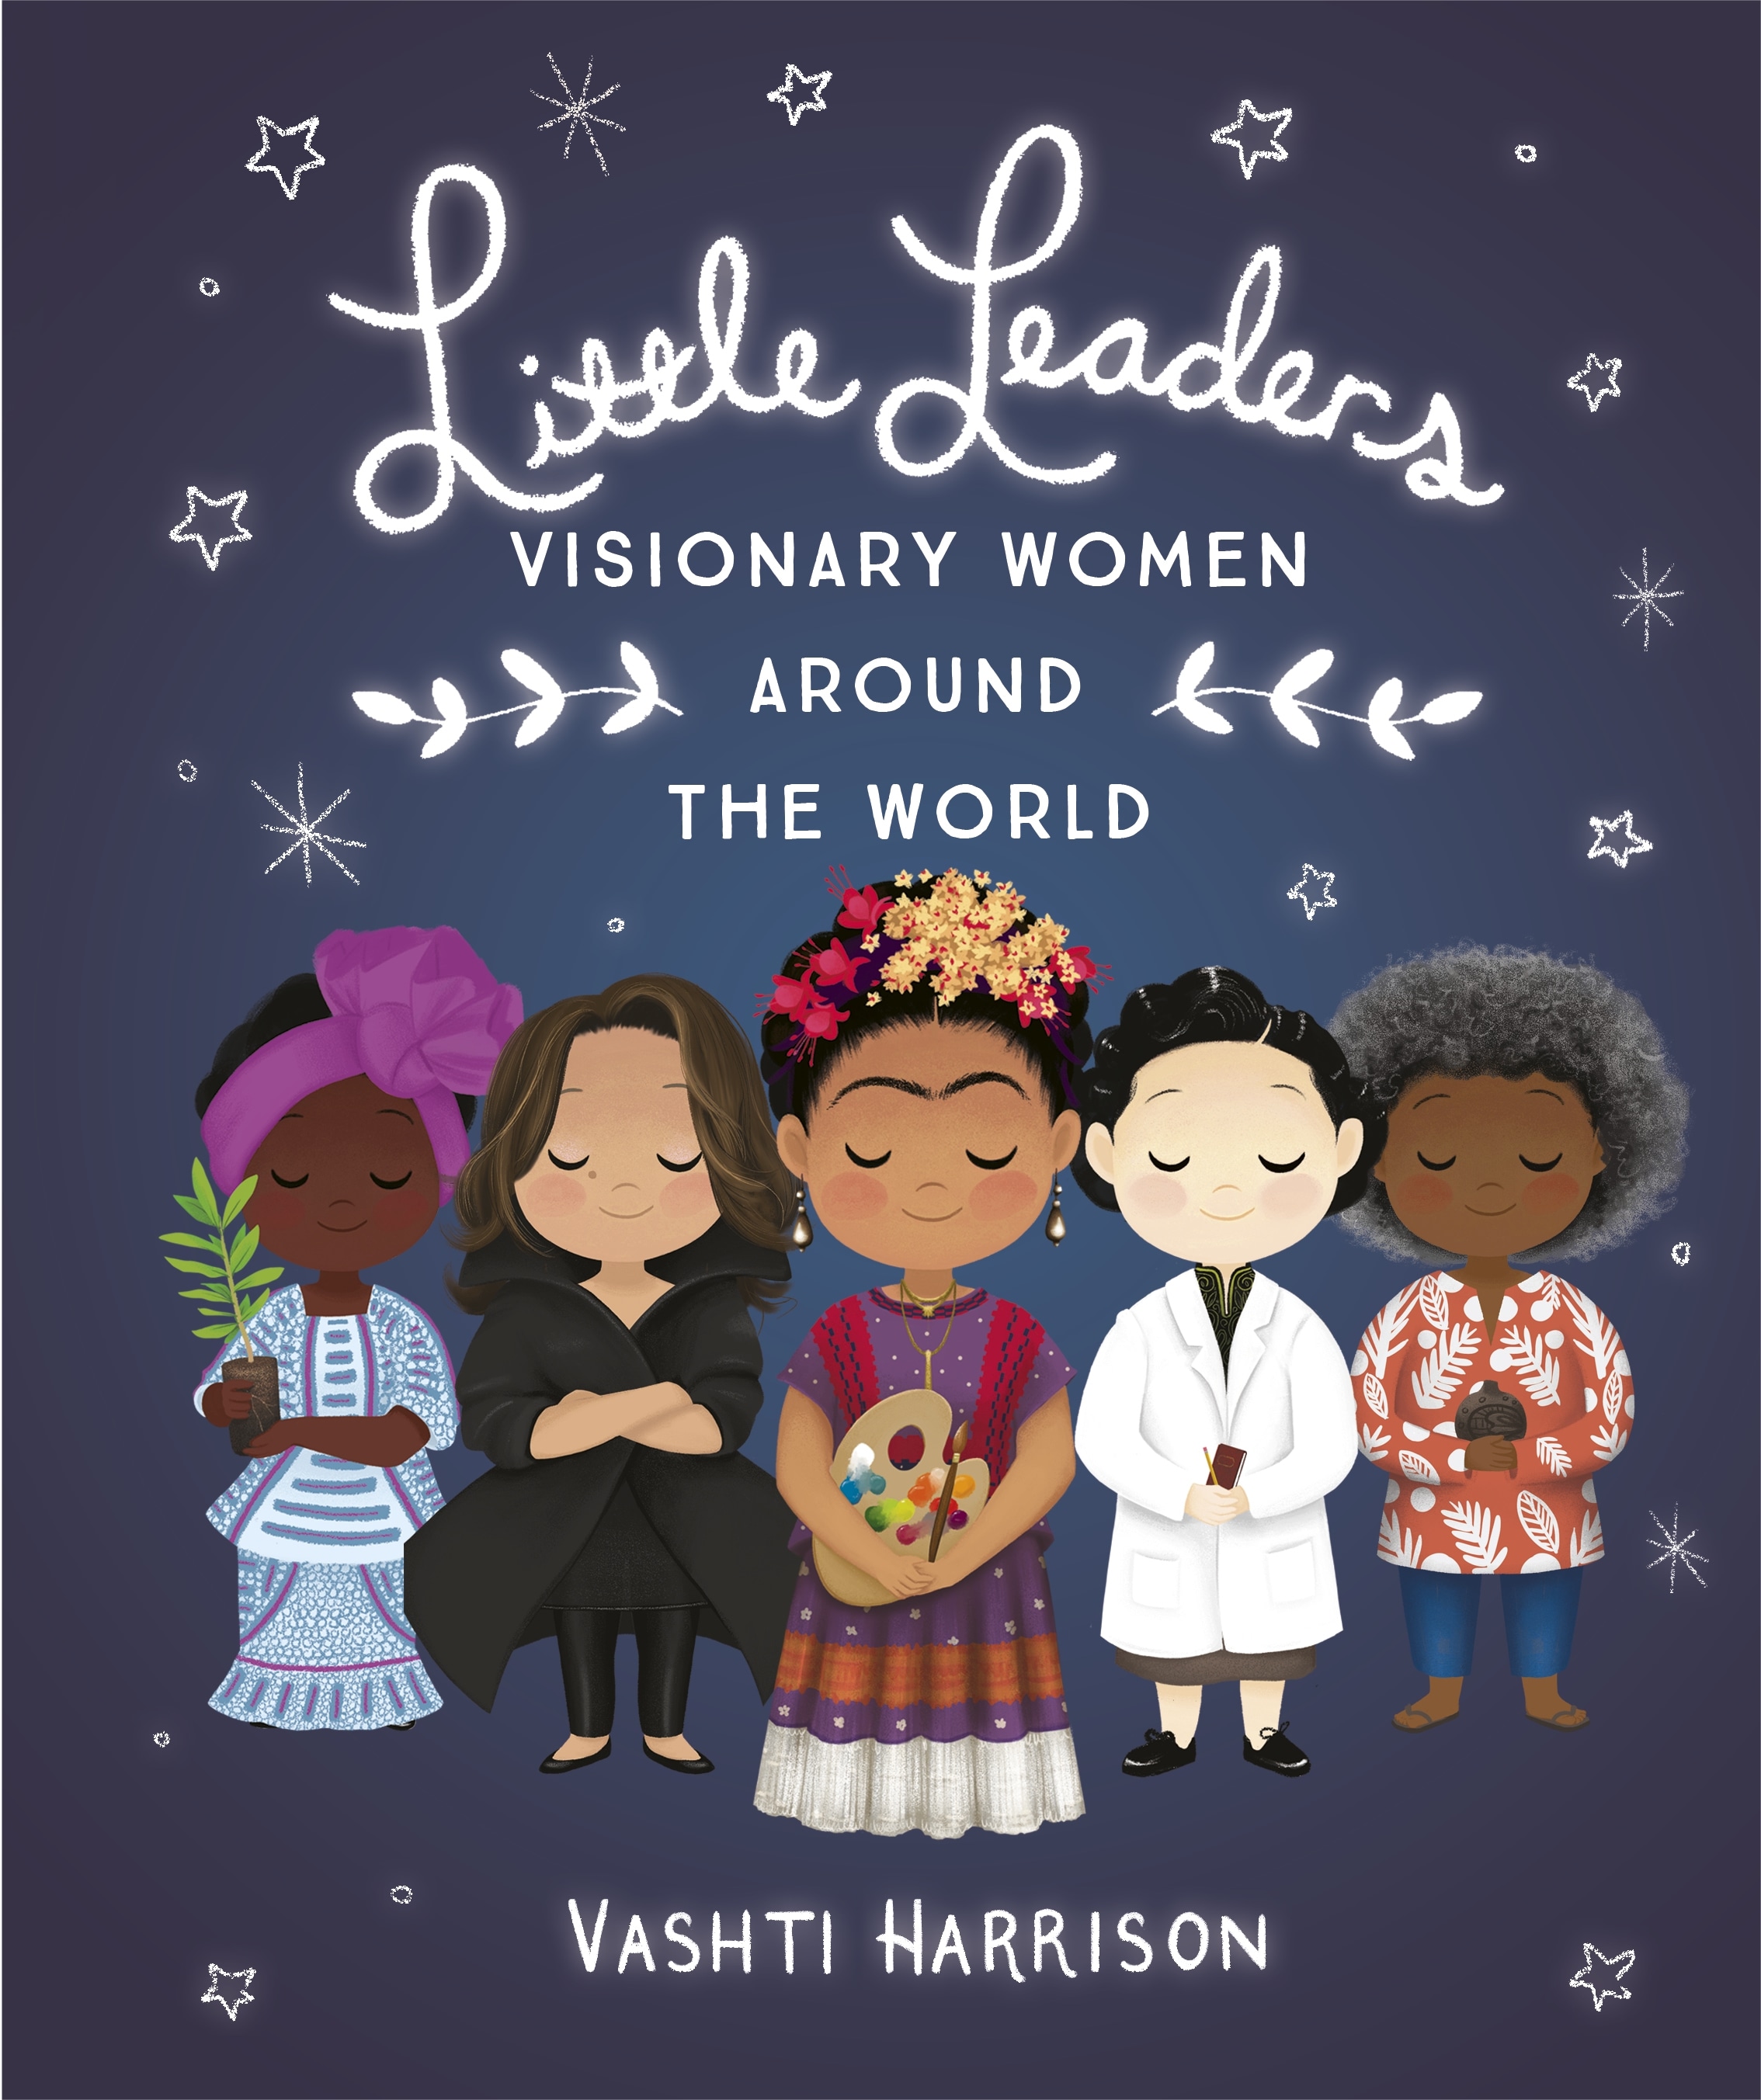 Book “Little Leaders: Visionary Women Around the World” by Vashti Harrison — July 23, 2020